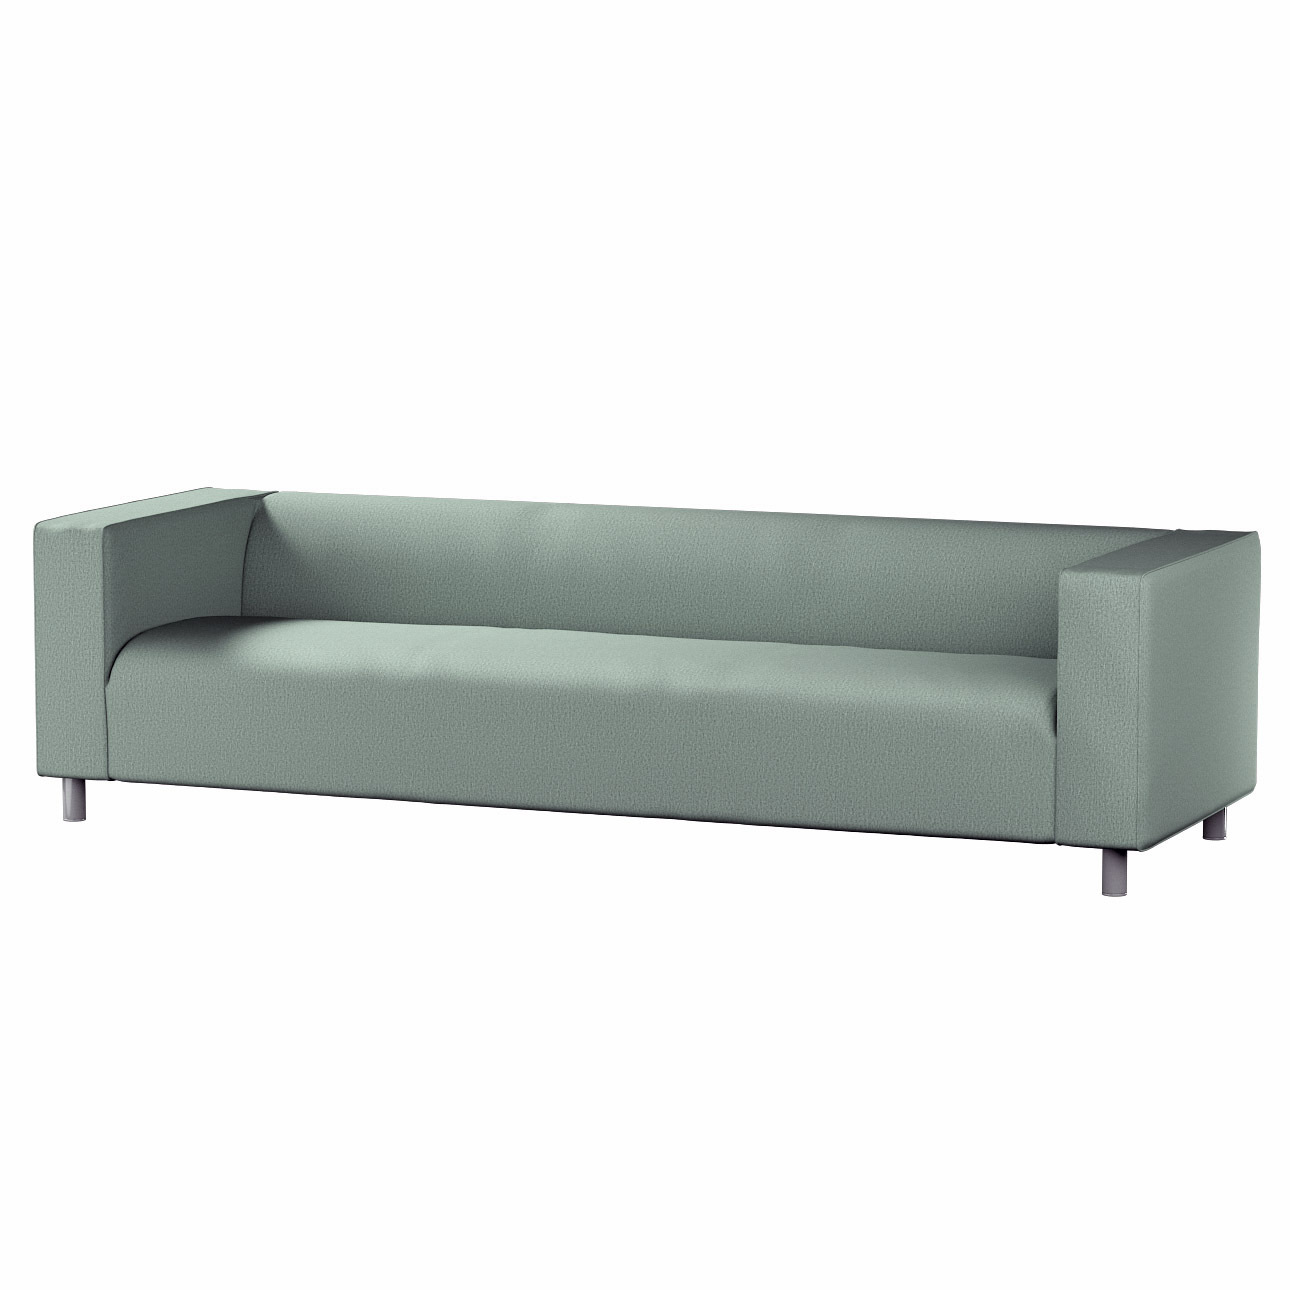 Bezug für Klippan 4-Sitzer Sofa, eukalyptusgrün, Bezug für Klippan 4-Sitzer günstig online kaufen